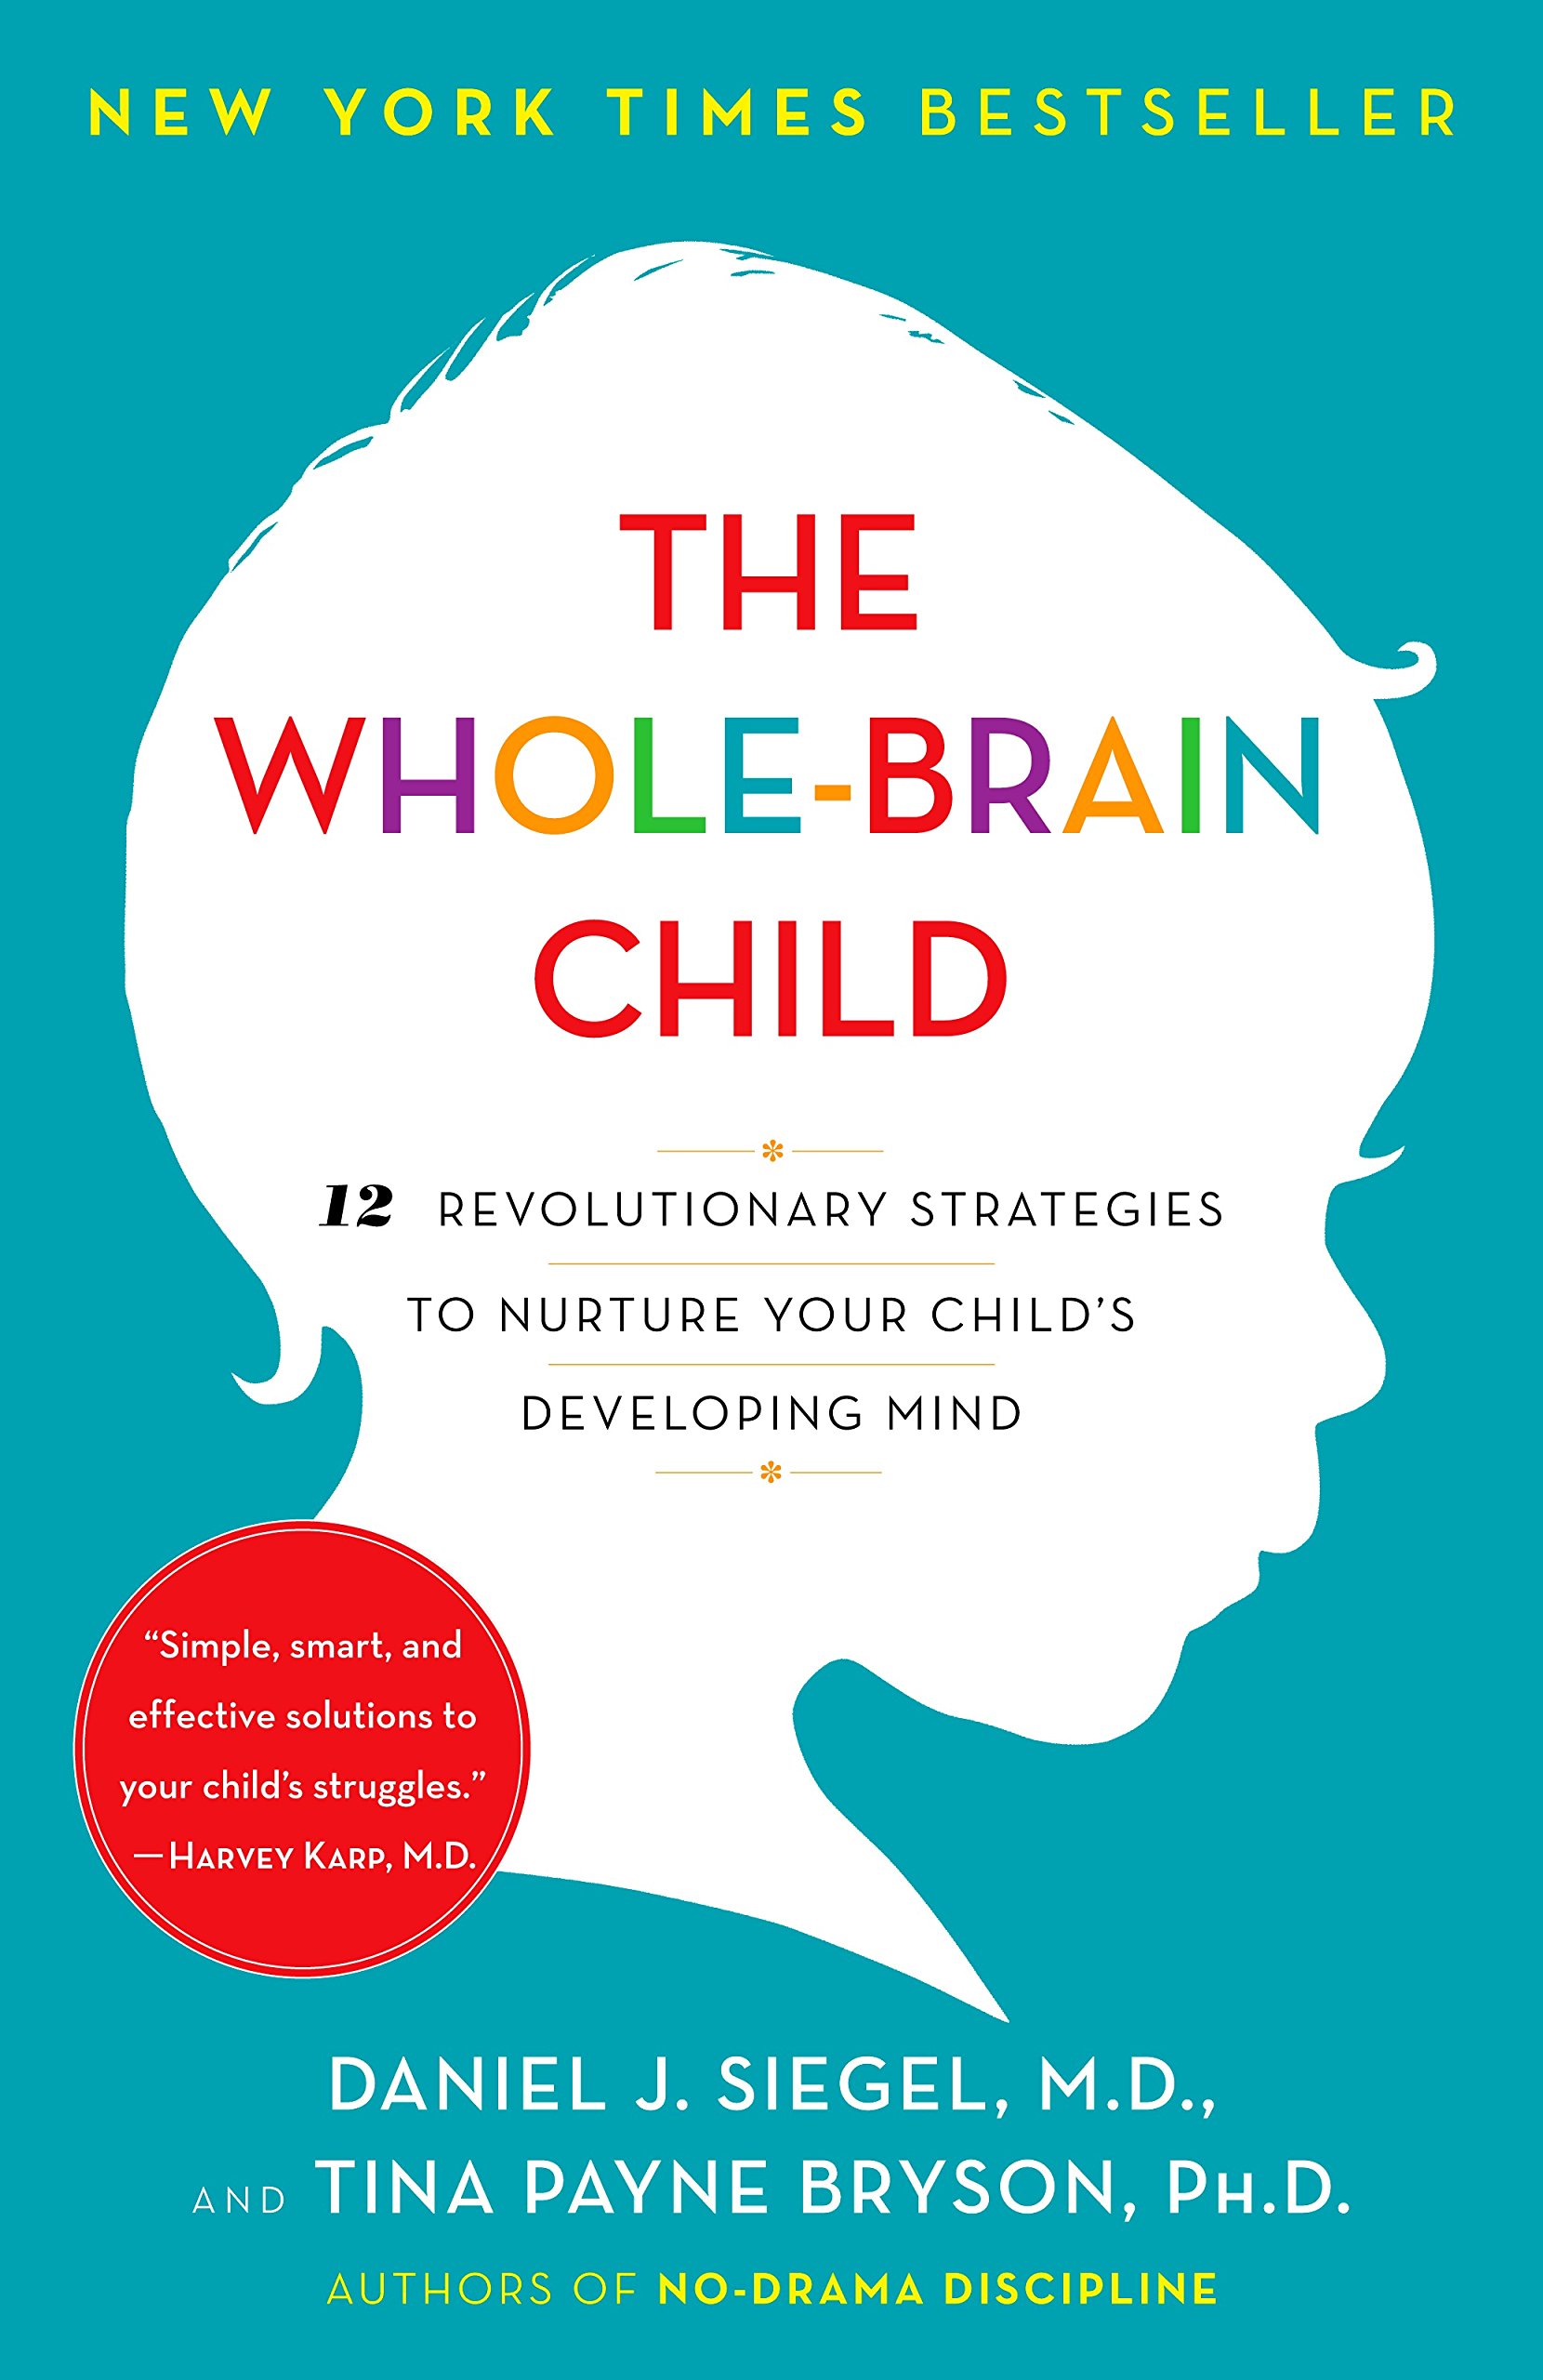 The Whole-Brain Child Summary